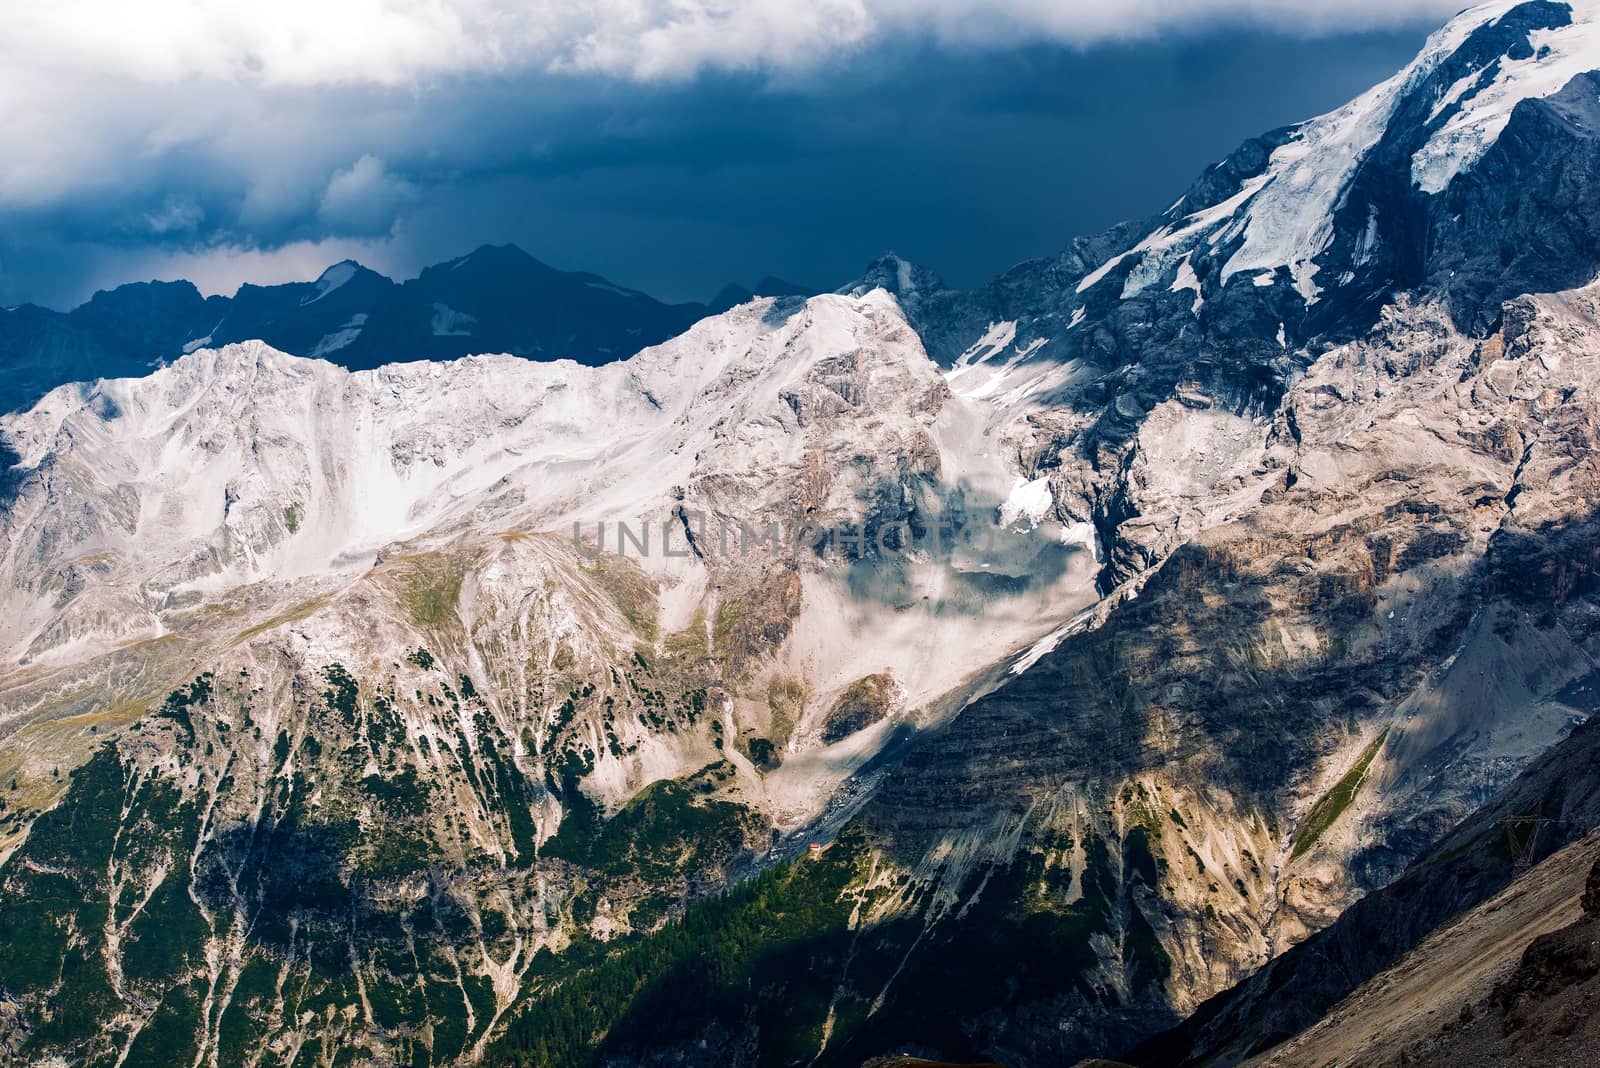 Scenic Italian Alps. Mountains Range in the Italy, Europe. Italian Alps Scenery.